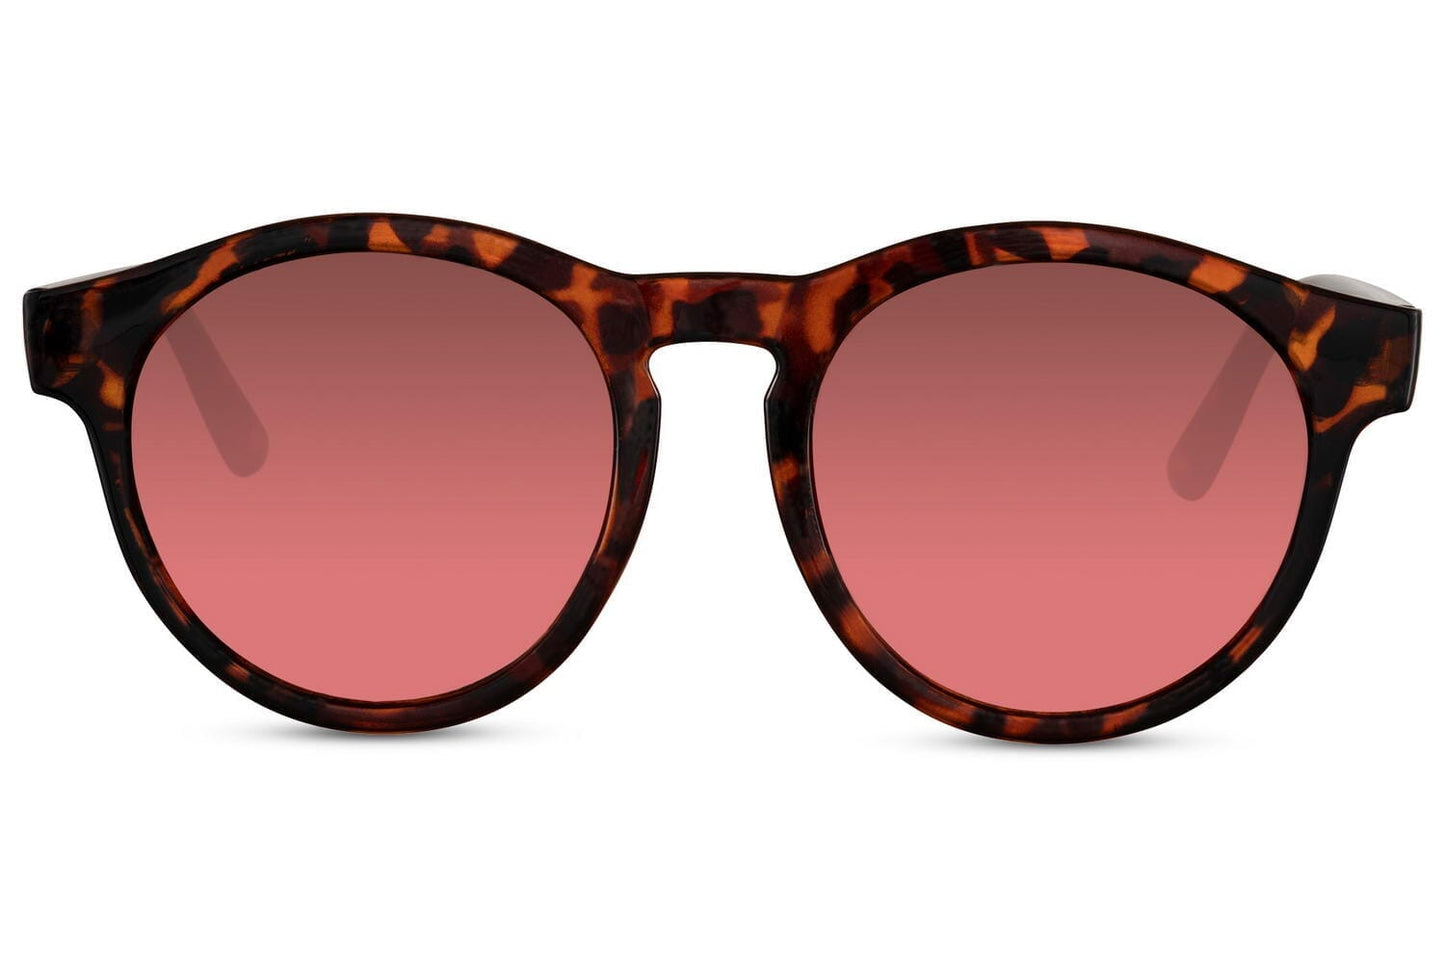 Keyhole nose bridge sunglasses. Round. Brown acetate frames. UV400 Protected.